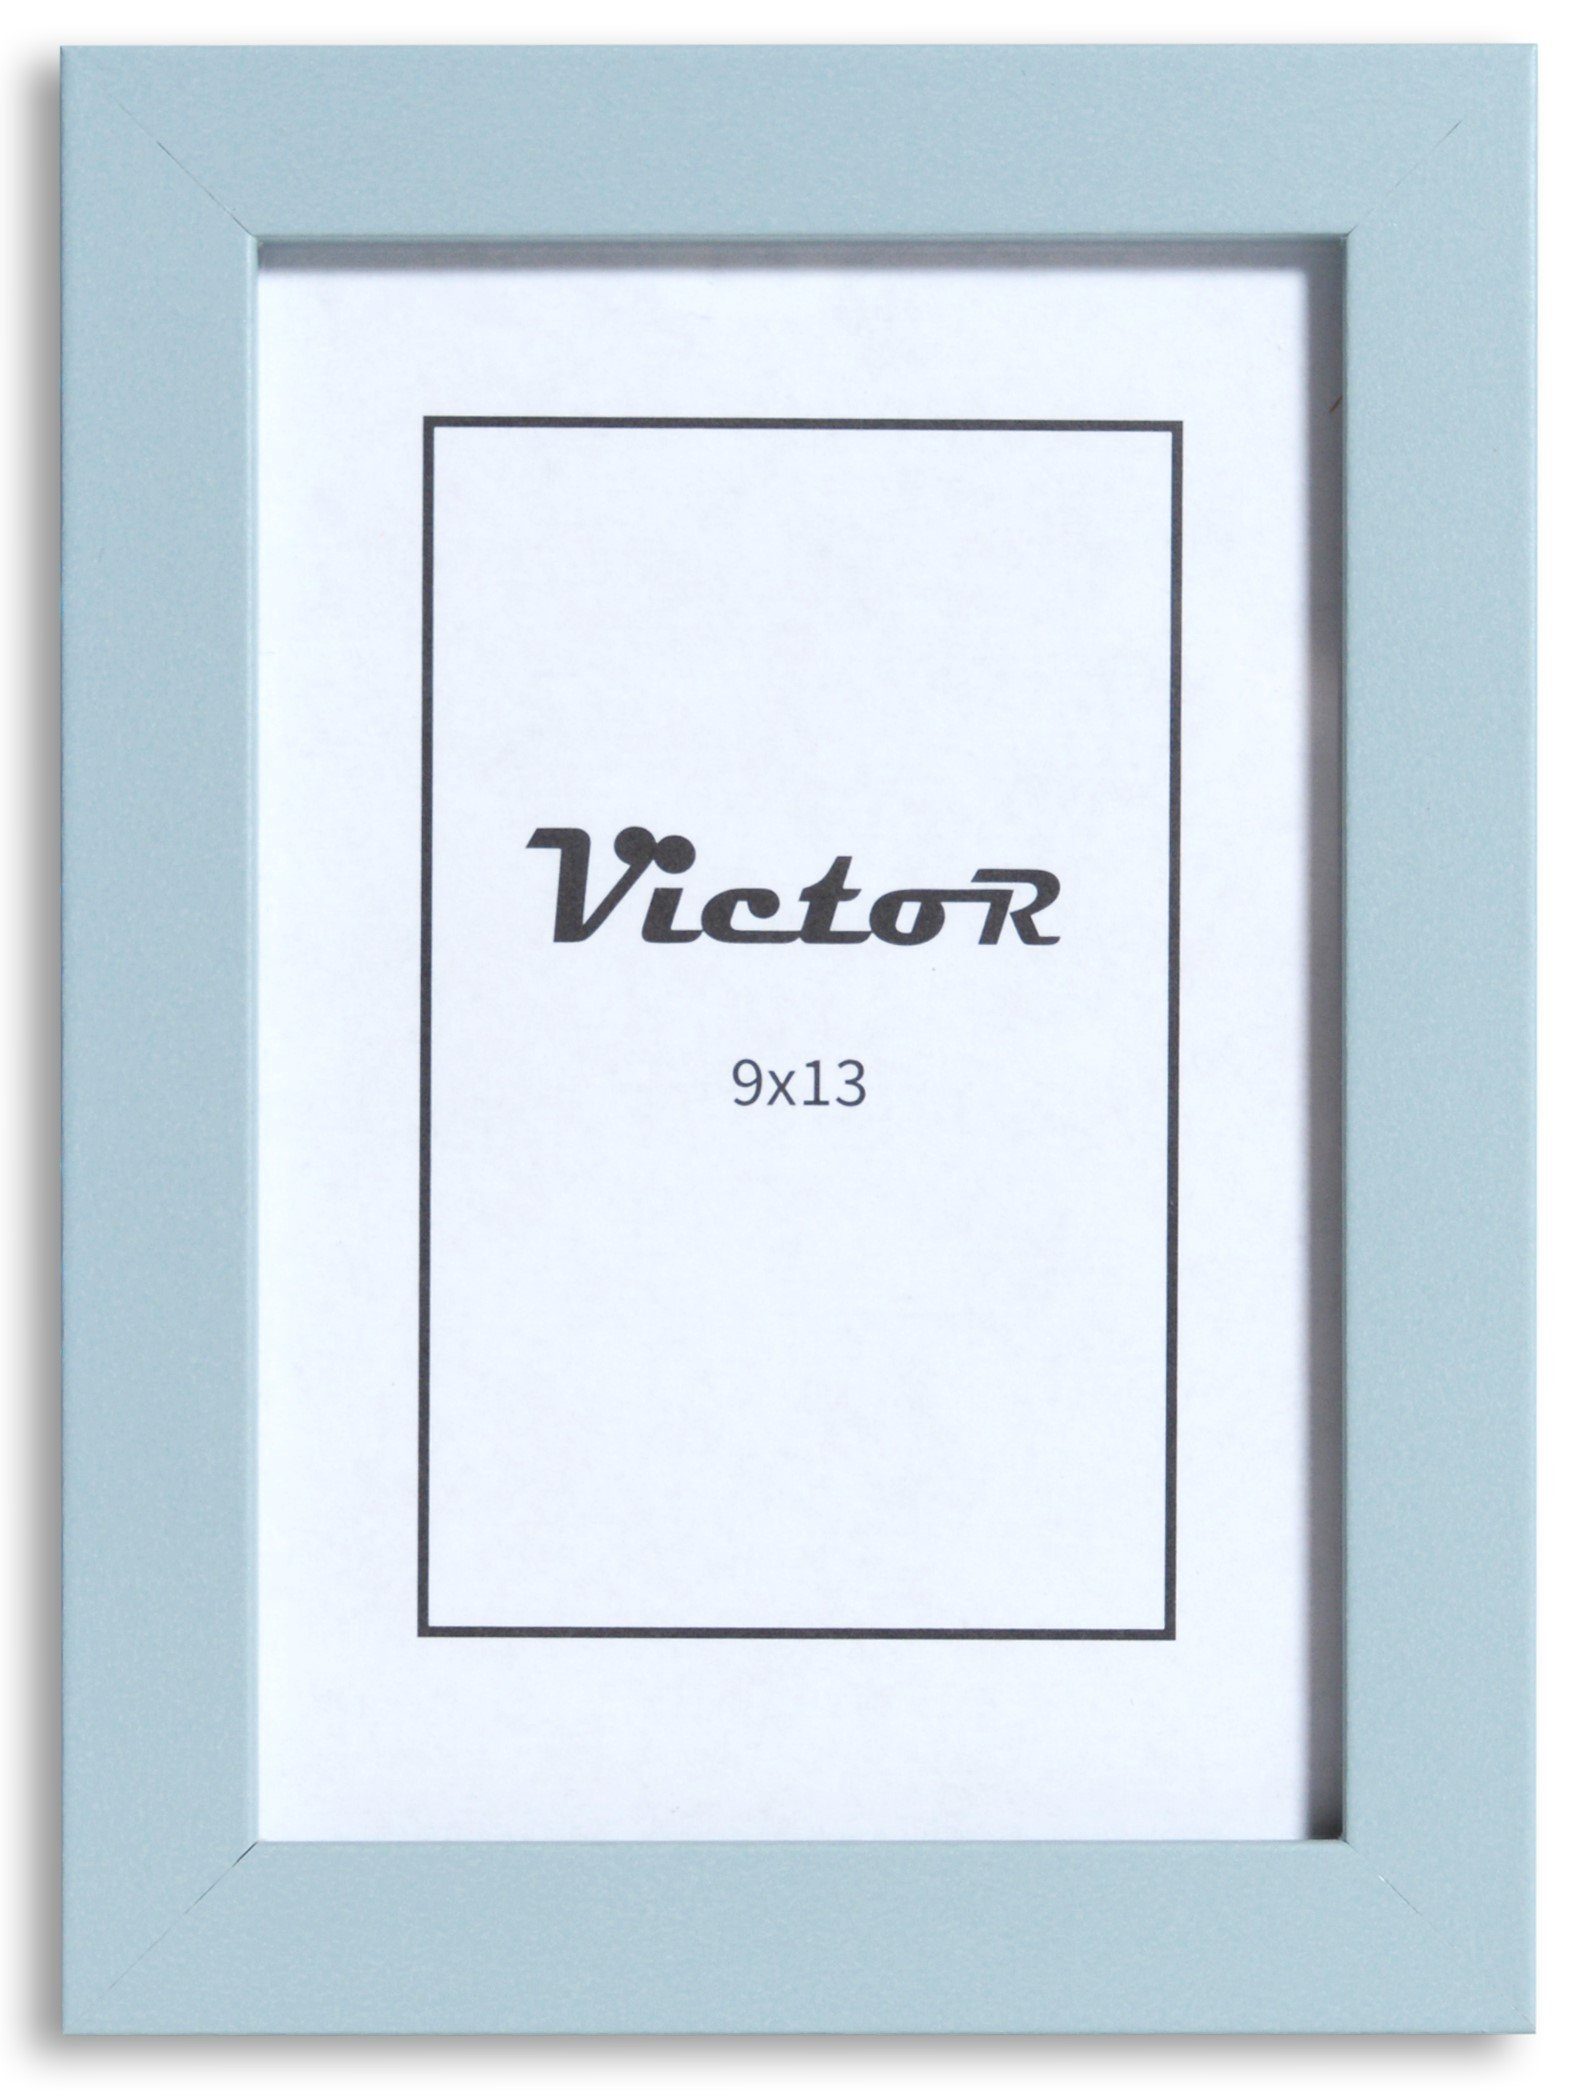 Victor (Zenith) Bilderrahmen Bilderrahmen "Klee" - Farbe: Blau - Größe: 9 x 13 cm, Bilderrahmen Blau 9x13 cm, Bilderrahmen Modern